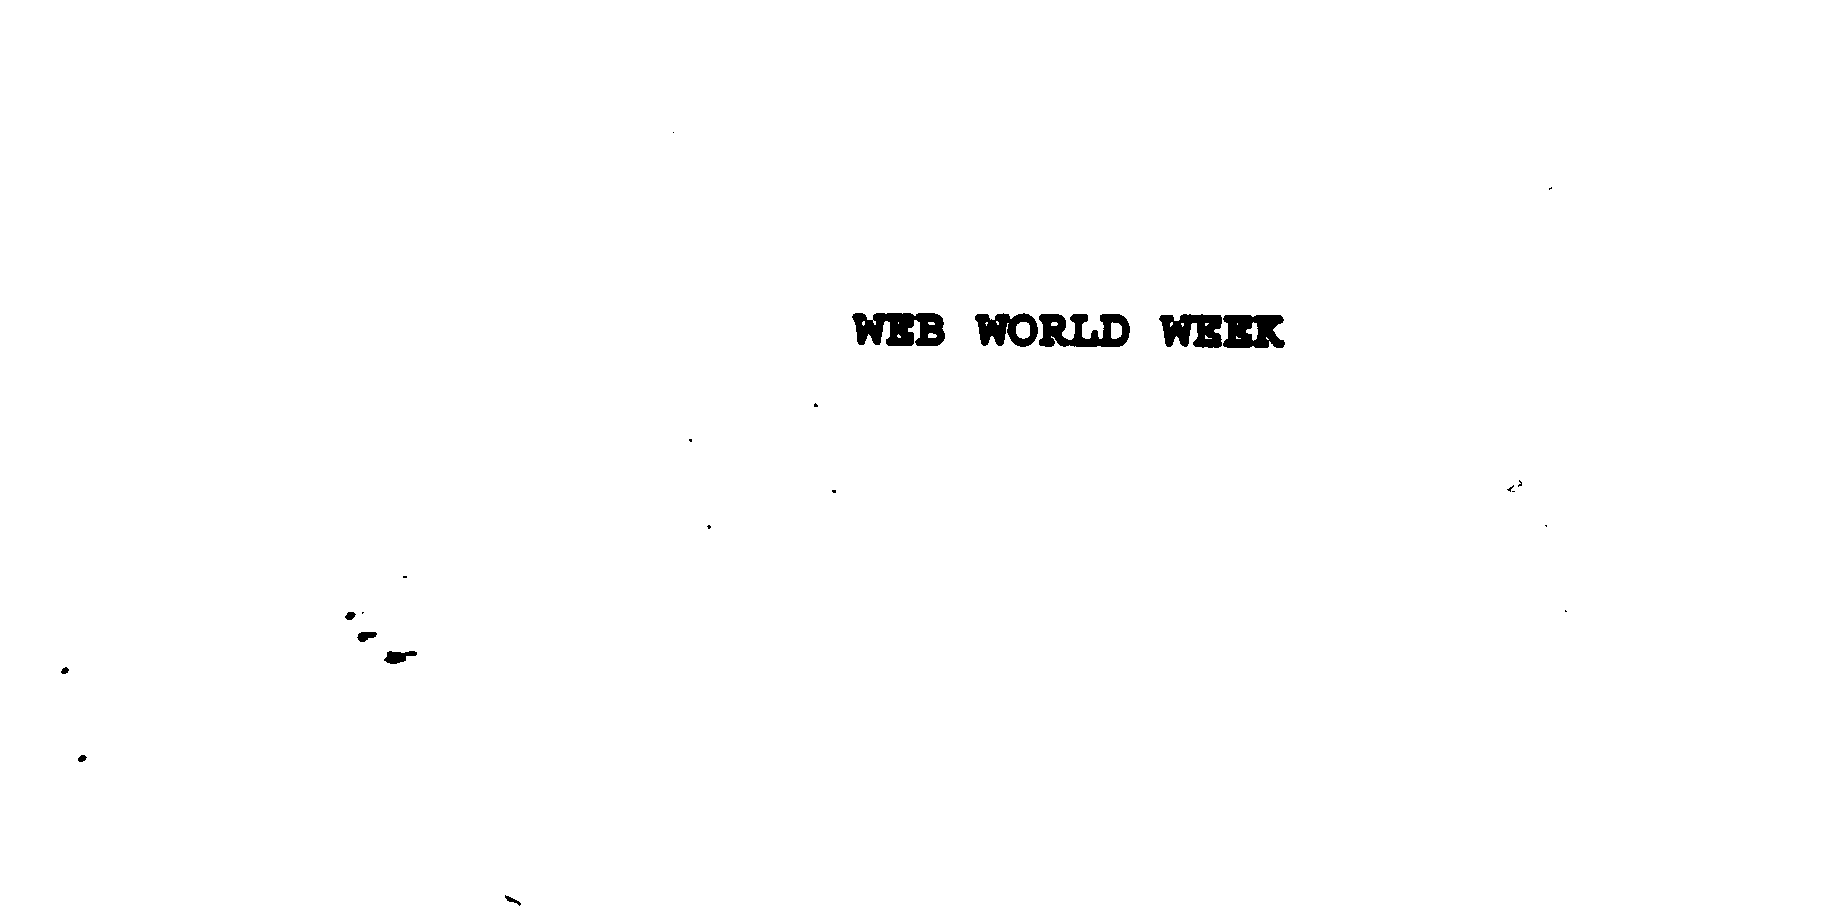  WEB WORLD WEEK